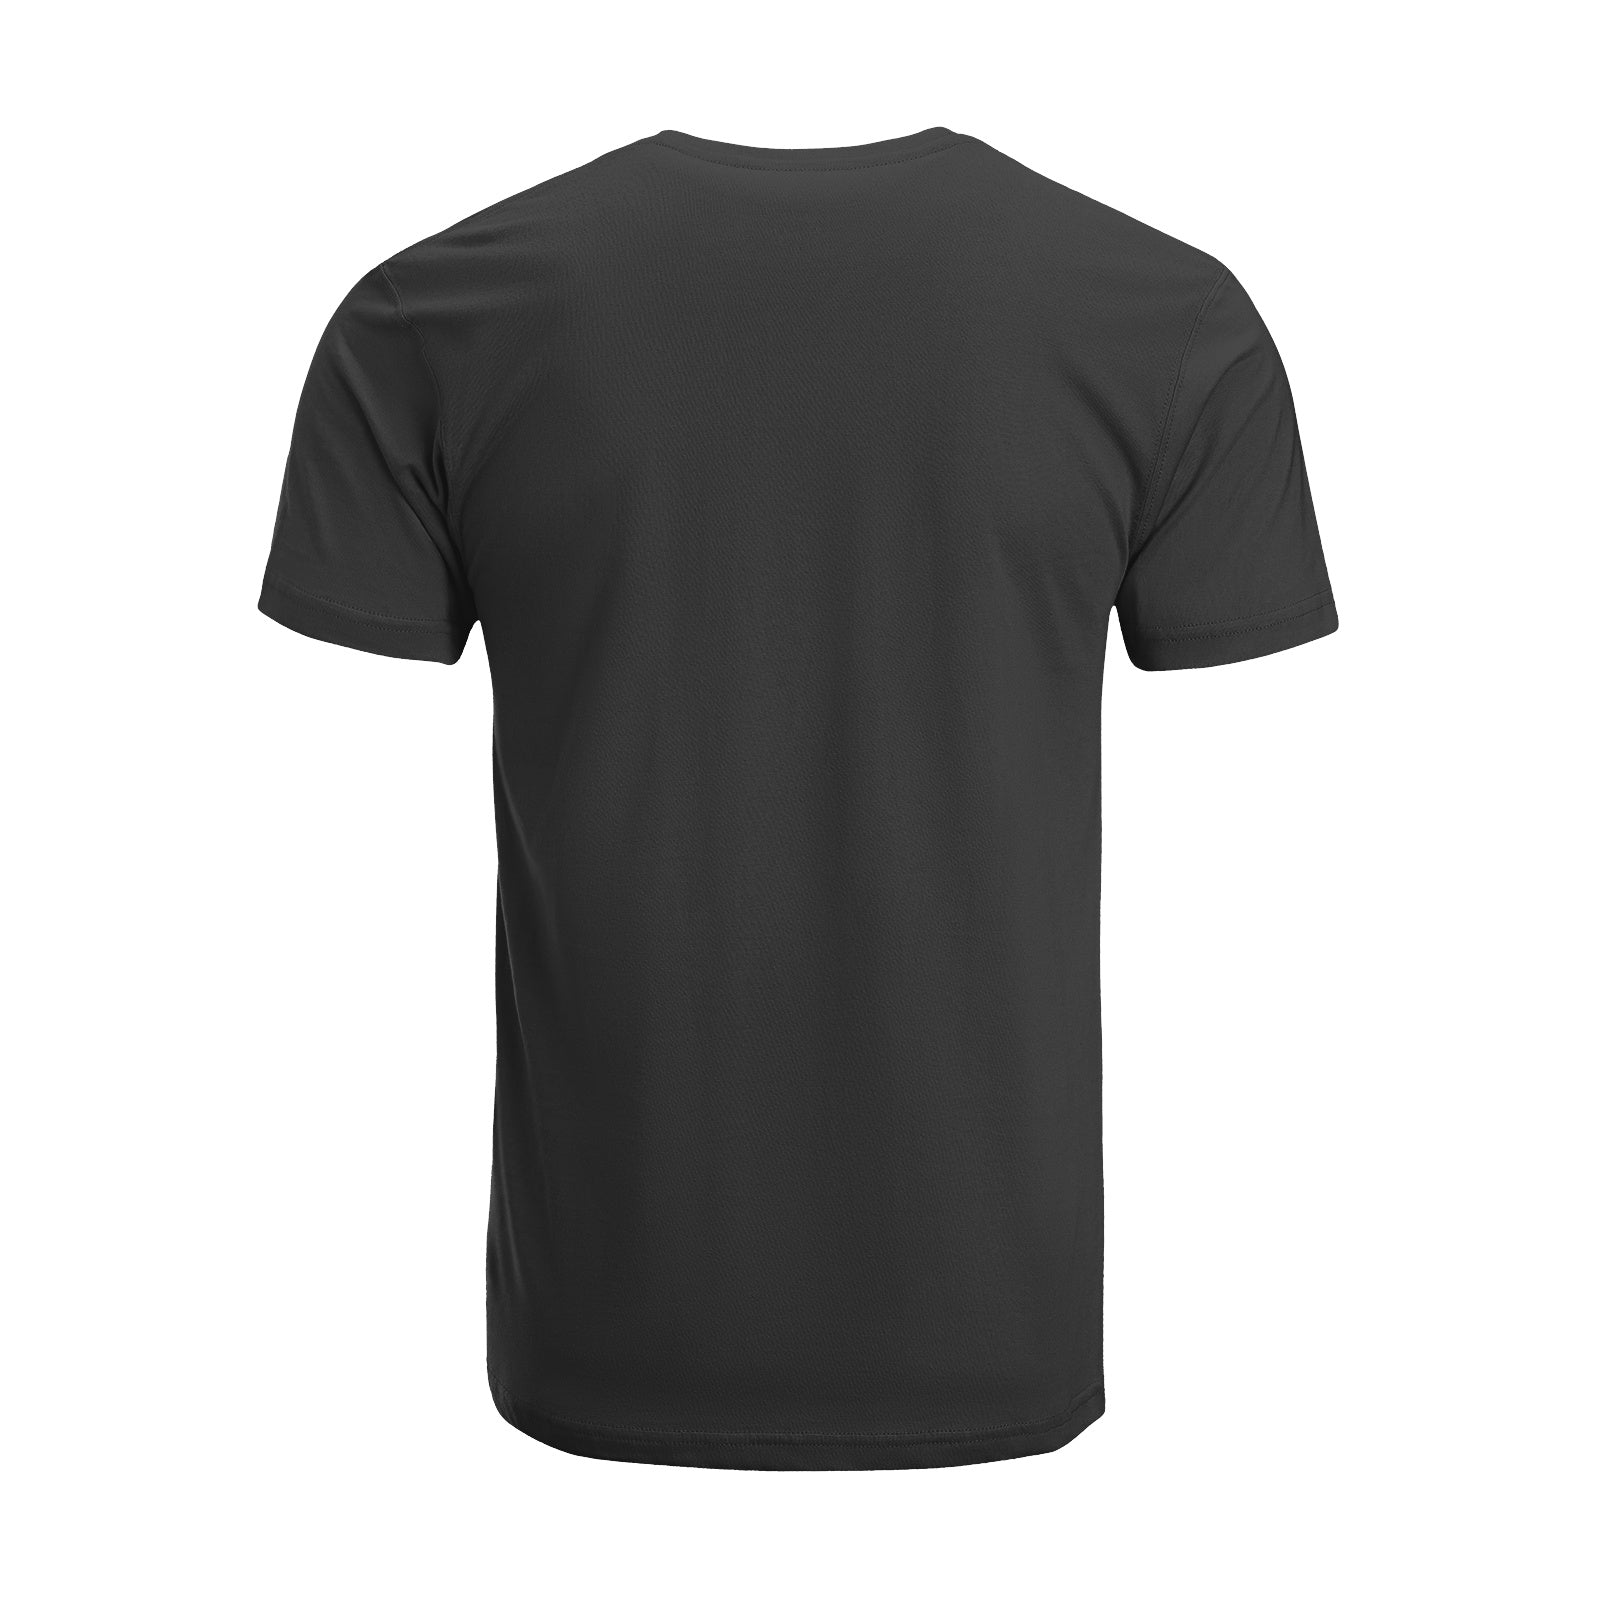 Unisex Short Sleeve Crew Neck Cotton Jersey T-Shirt CAT 40 - Tara-Outfits.com